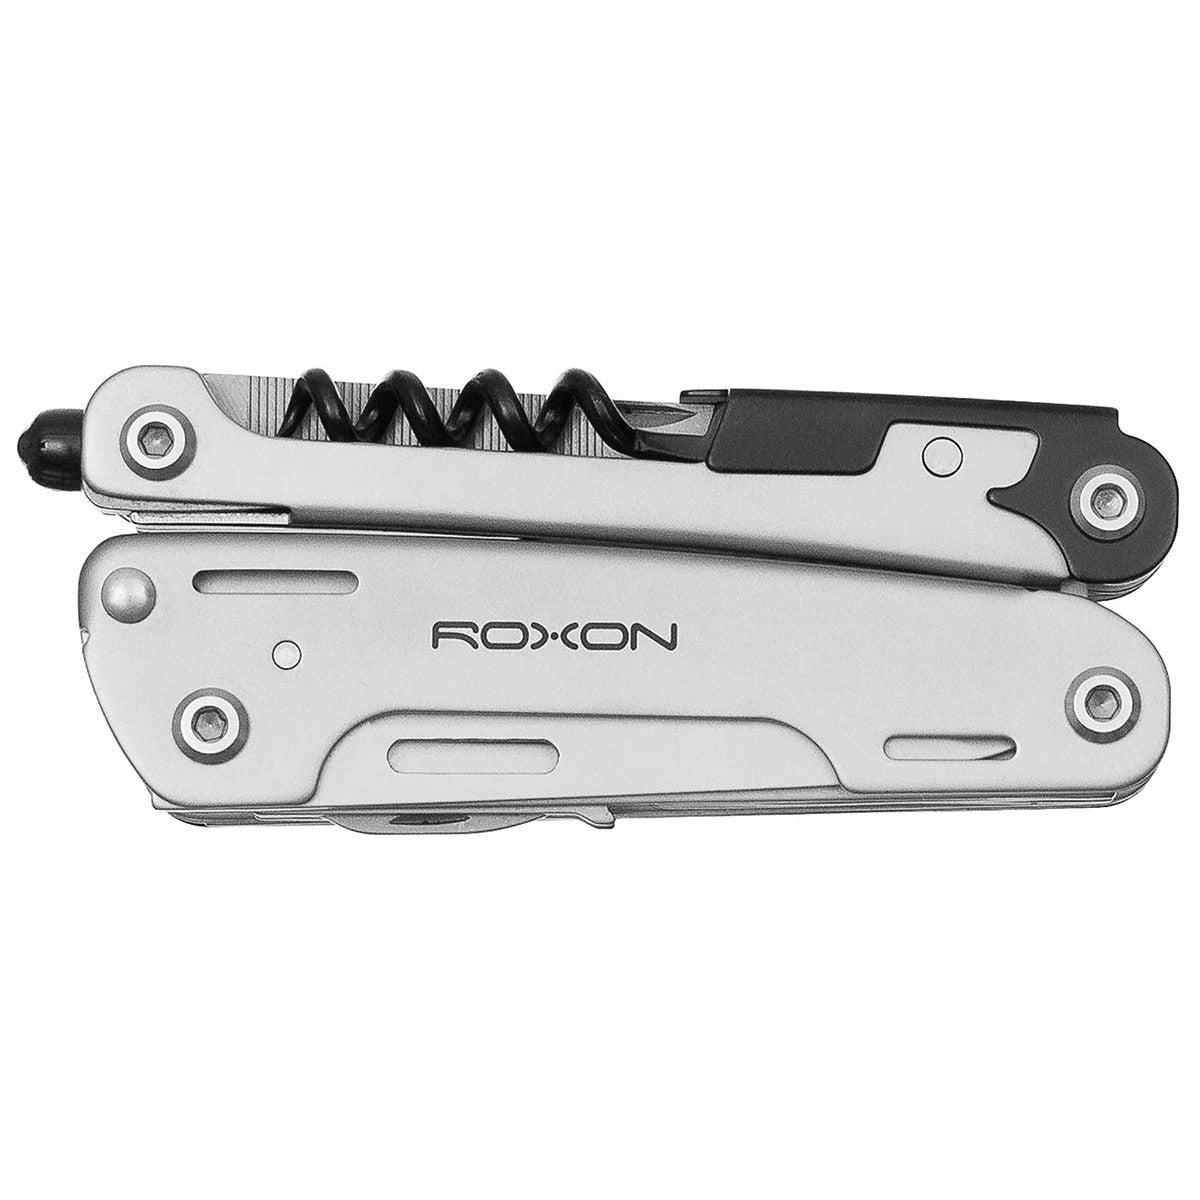 ROXON multifunction tool, "Storm", 16 pieces